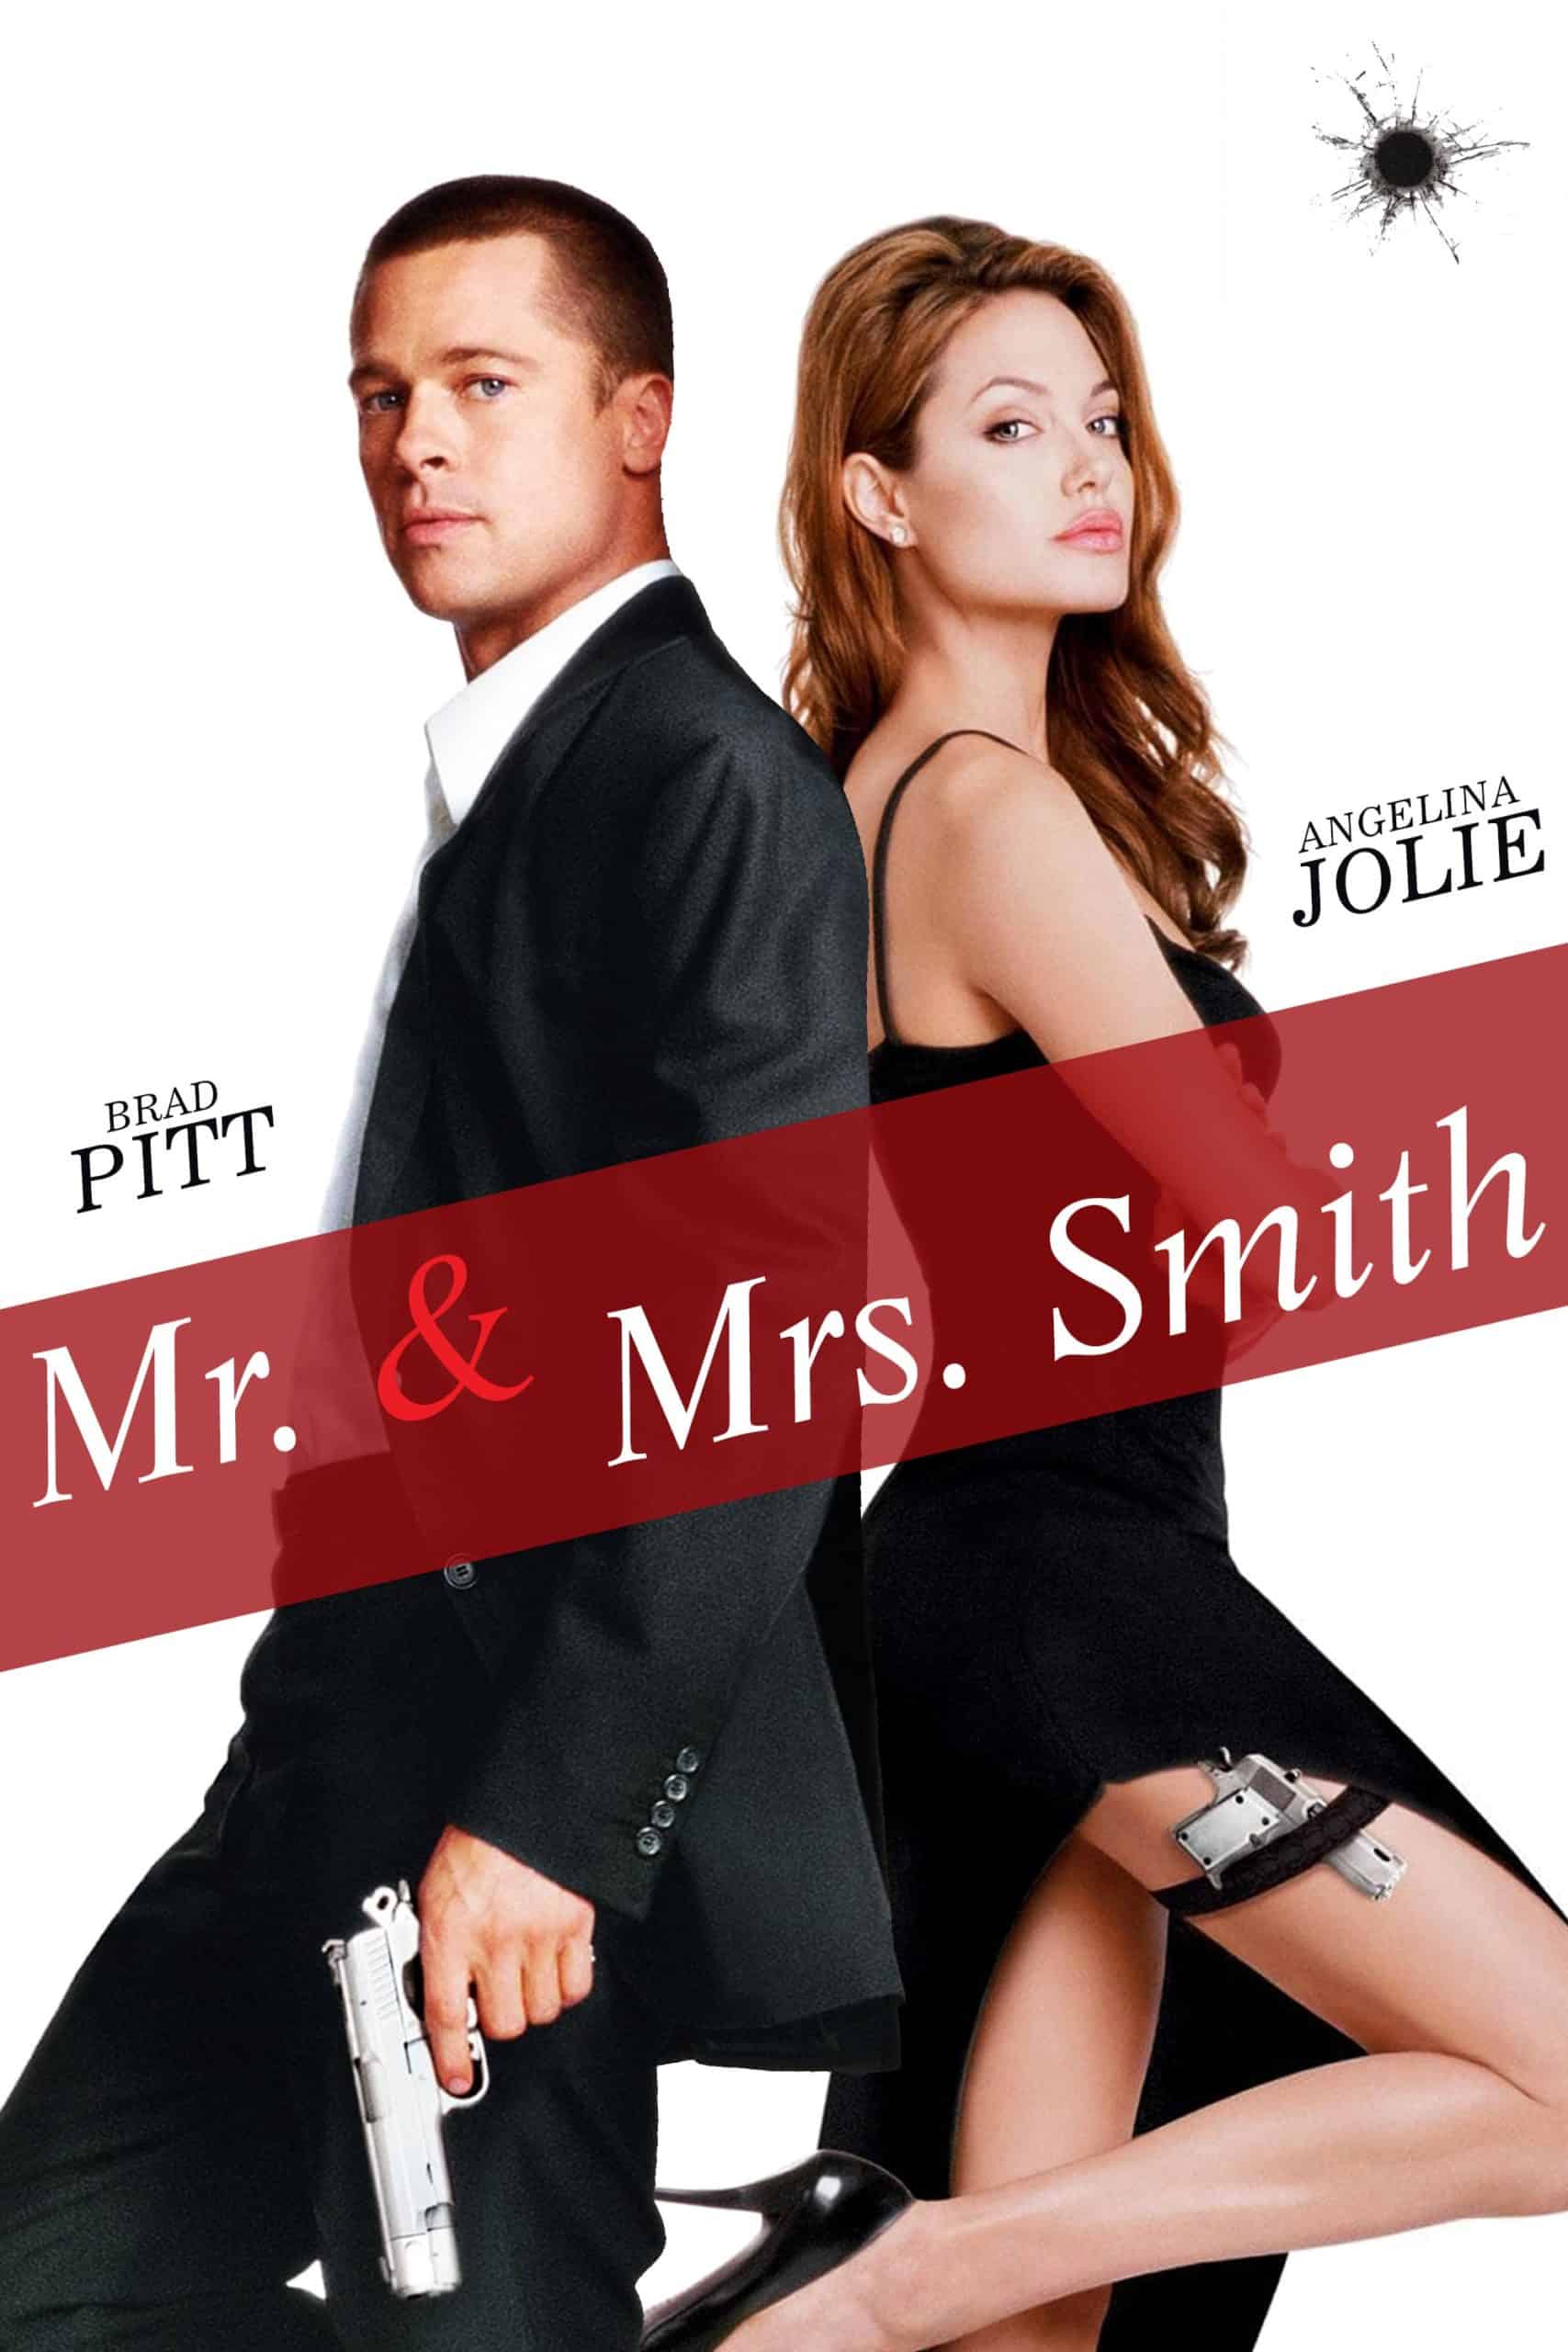 Mr. & Mrs. Smith (2005) นายและนางคู่พิฆาต